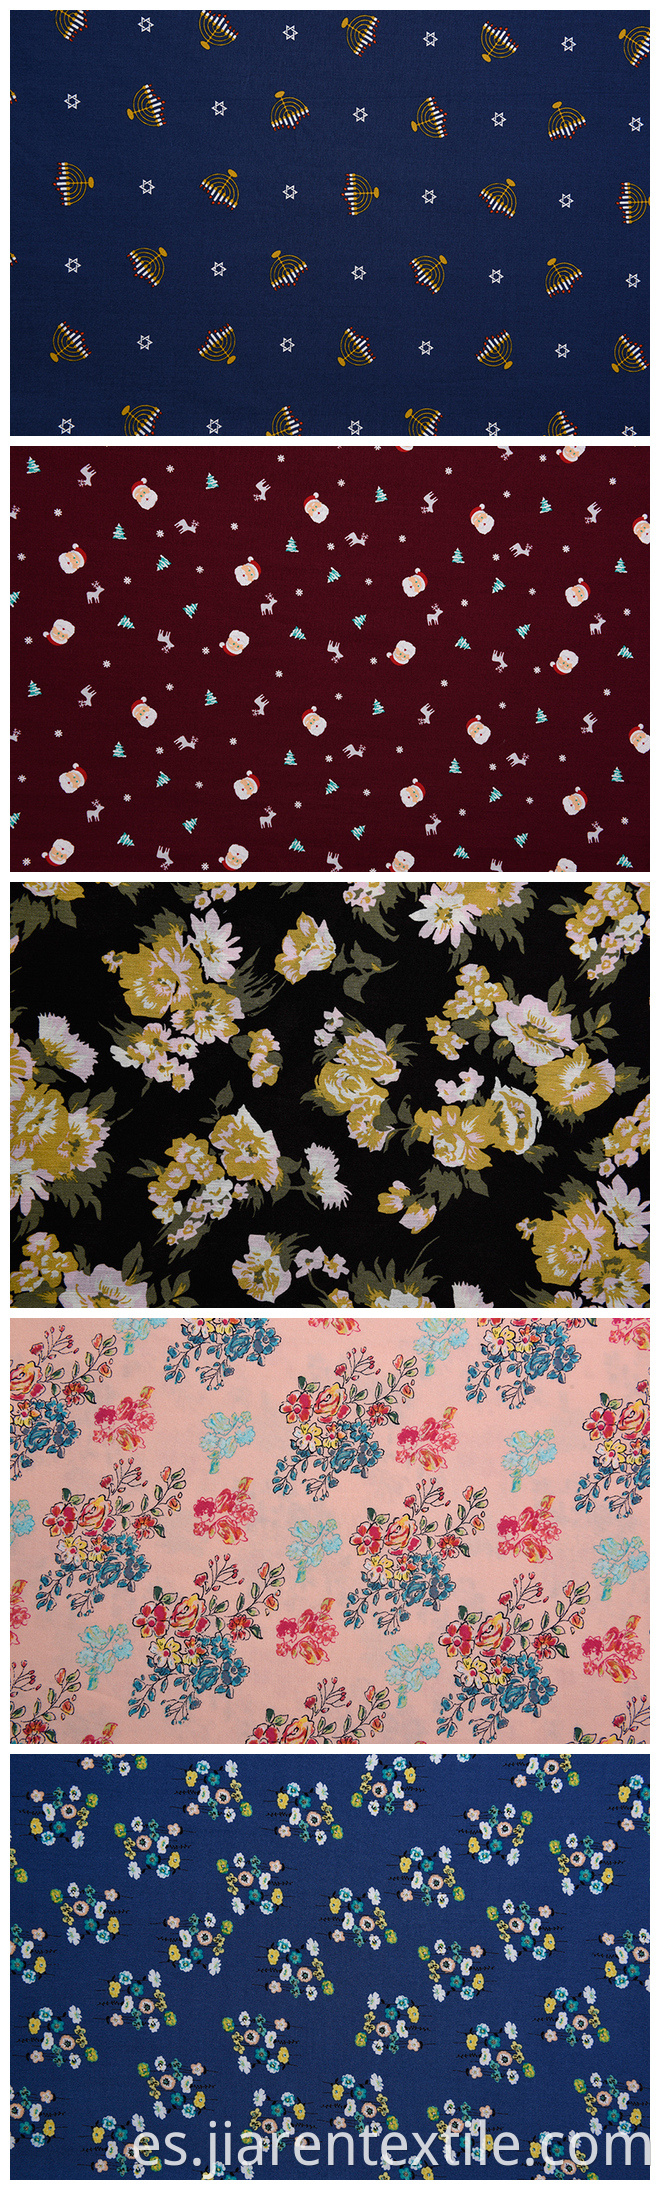 Unknow Flower Pattern Printed Fabrics